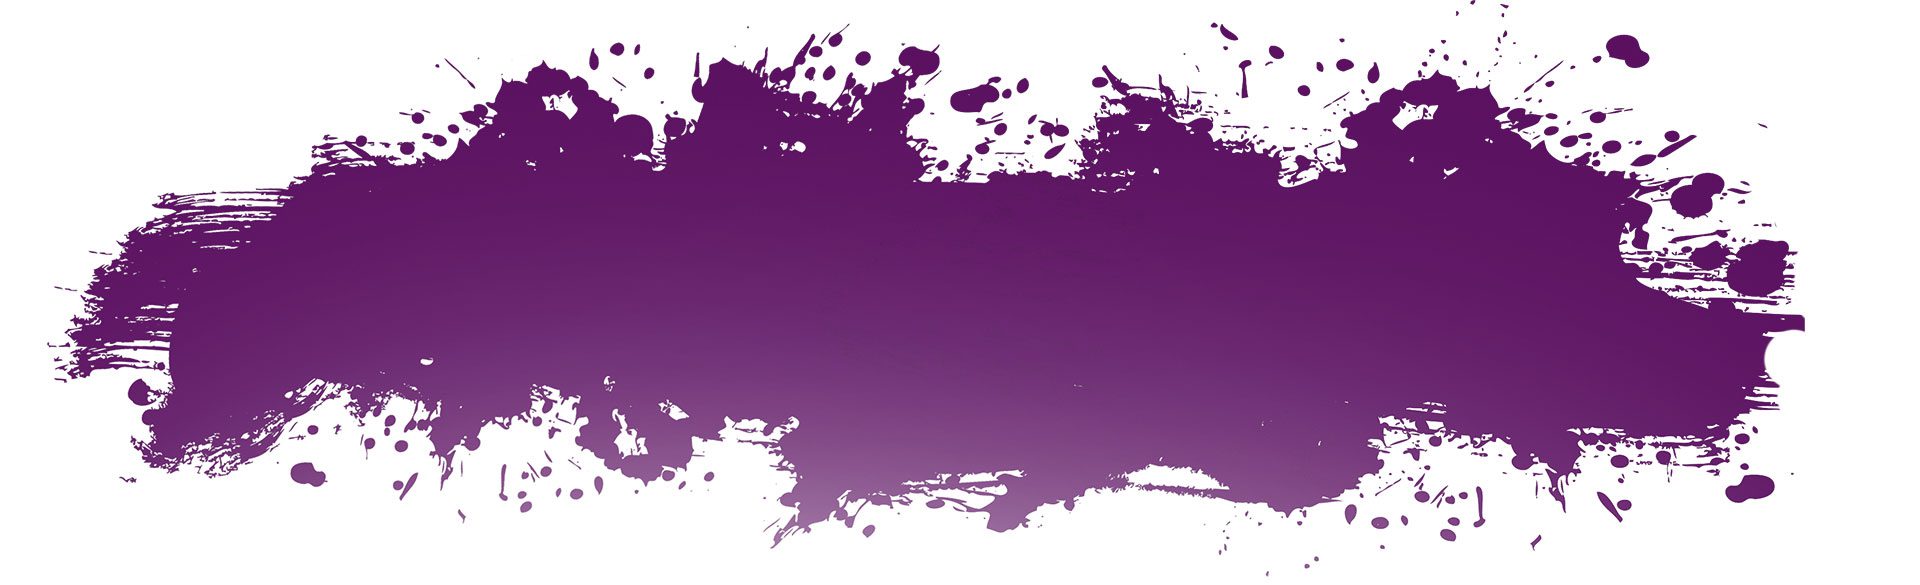 purple paint splodge banner